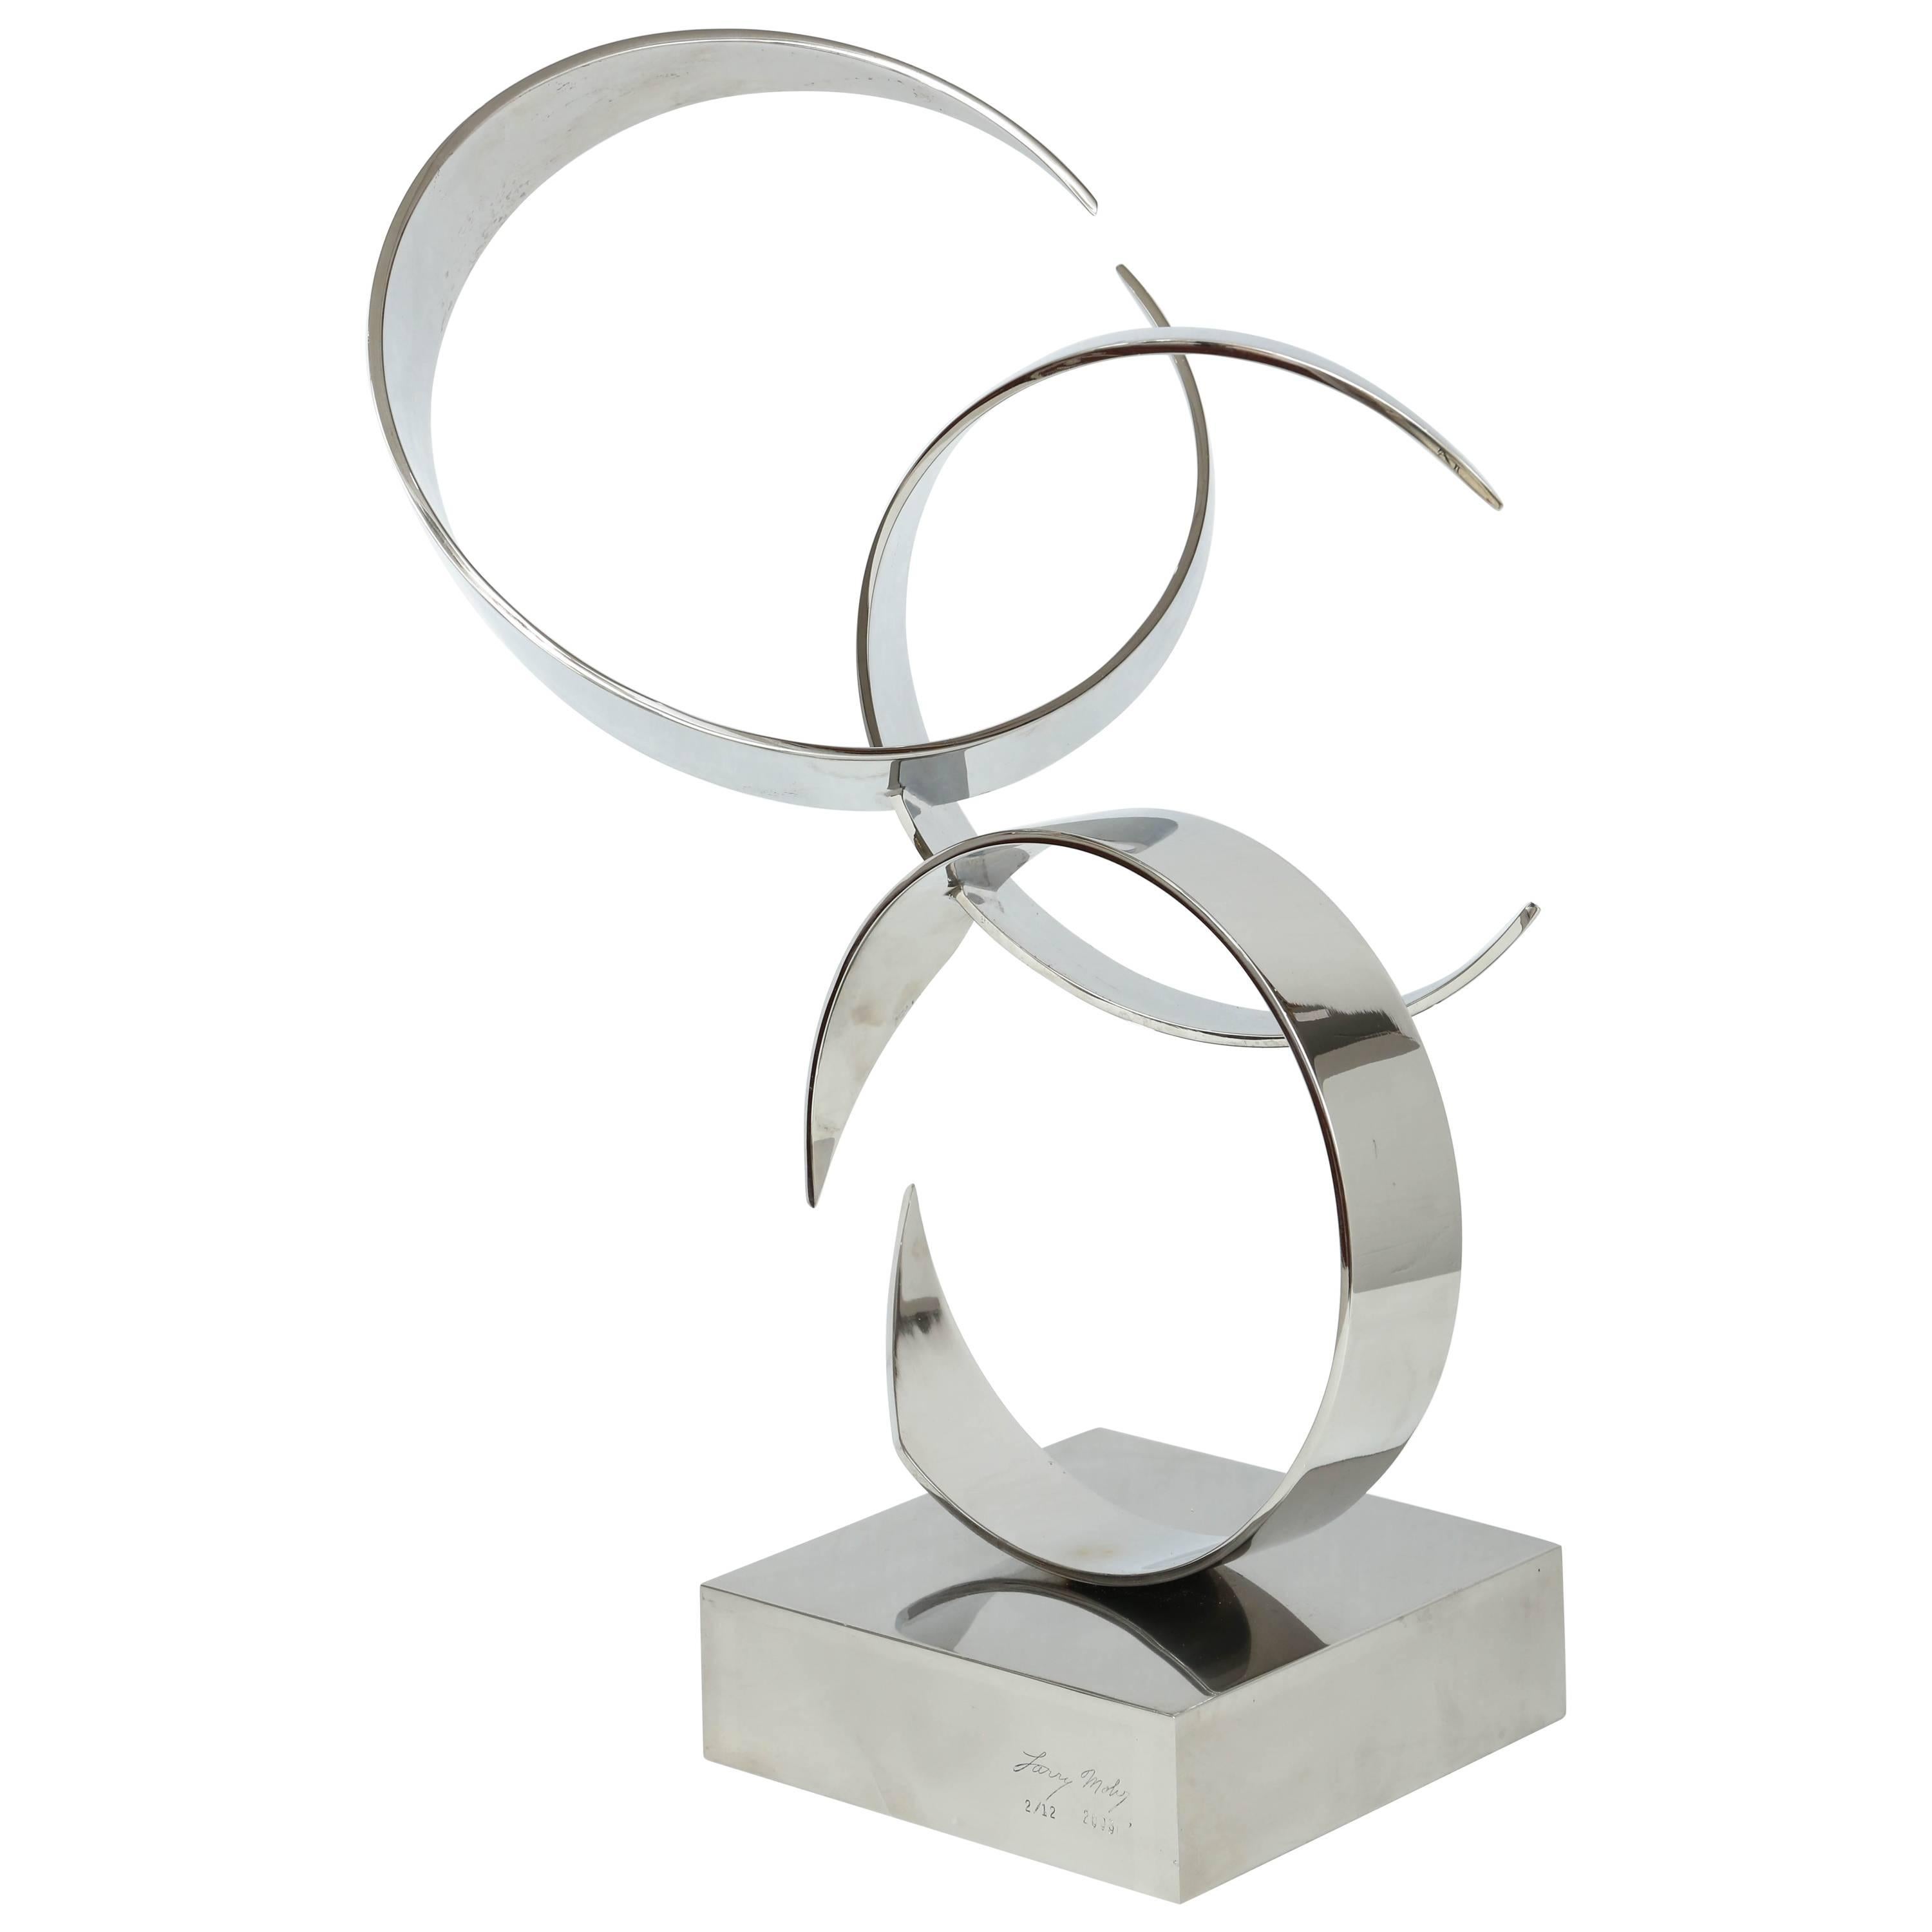 Sculpture, Three Interlocking "C's" by Larry Mohr, American, 2003